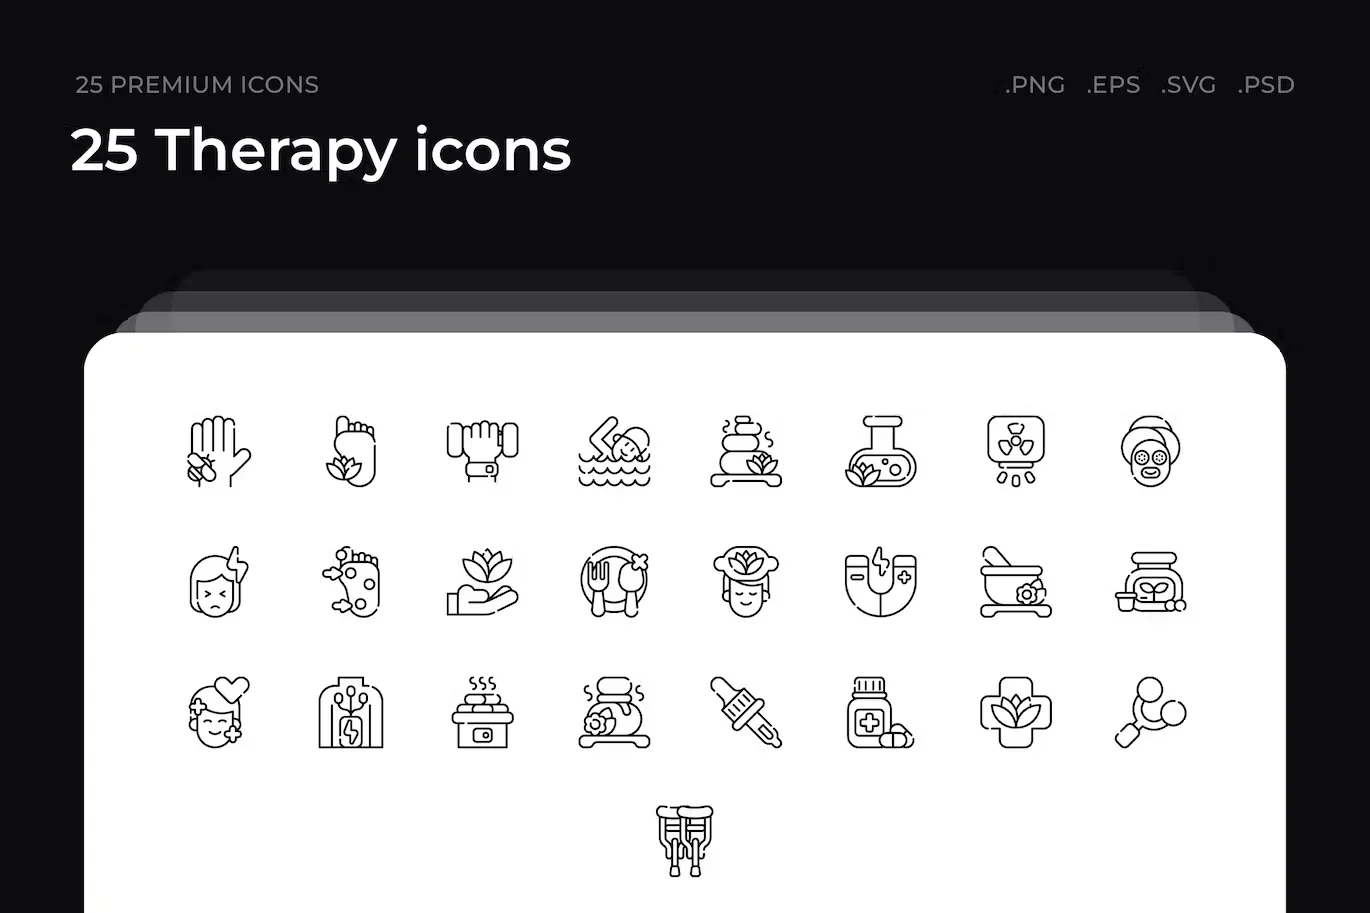 25 Premium Therapy icons